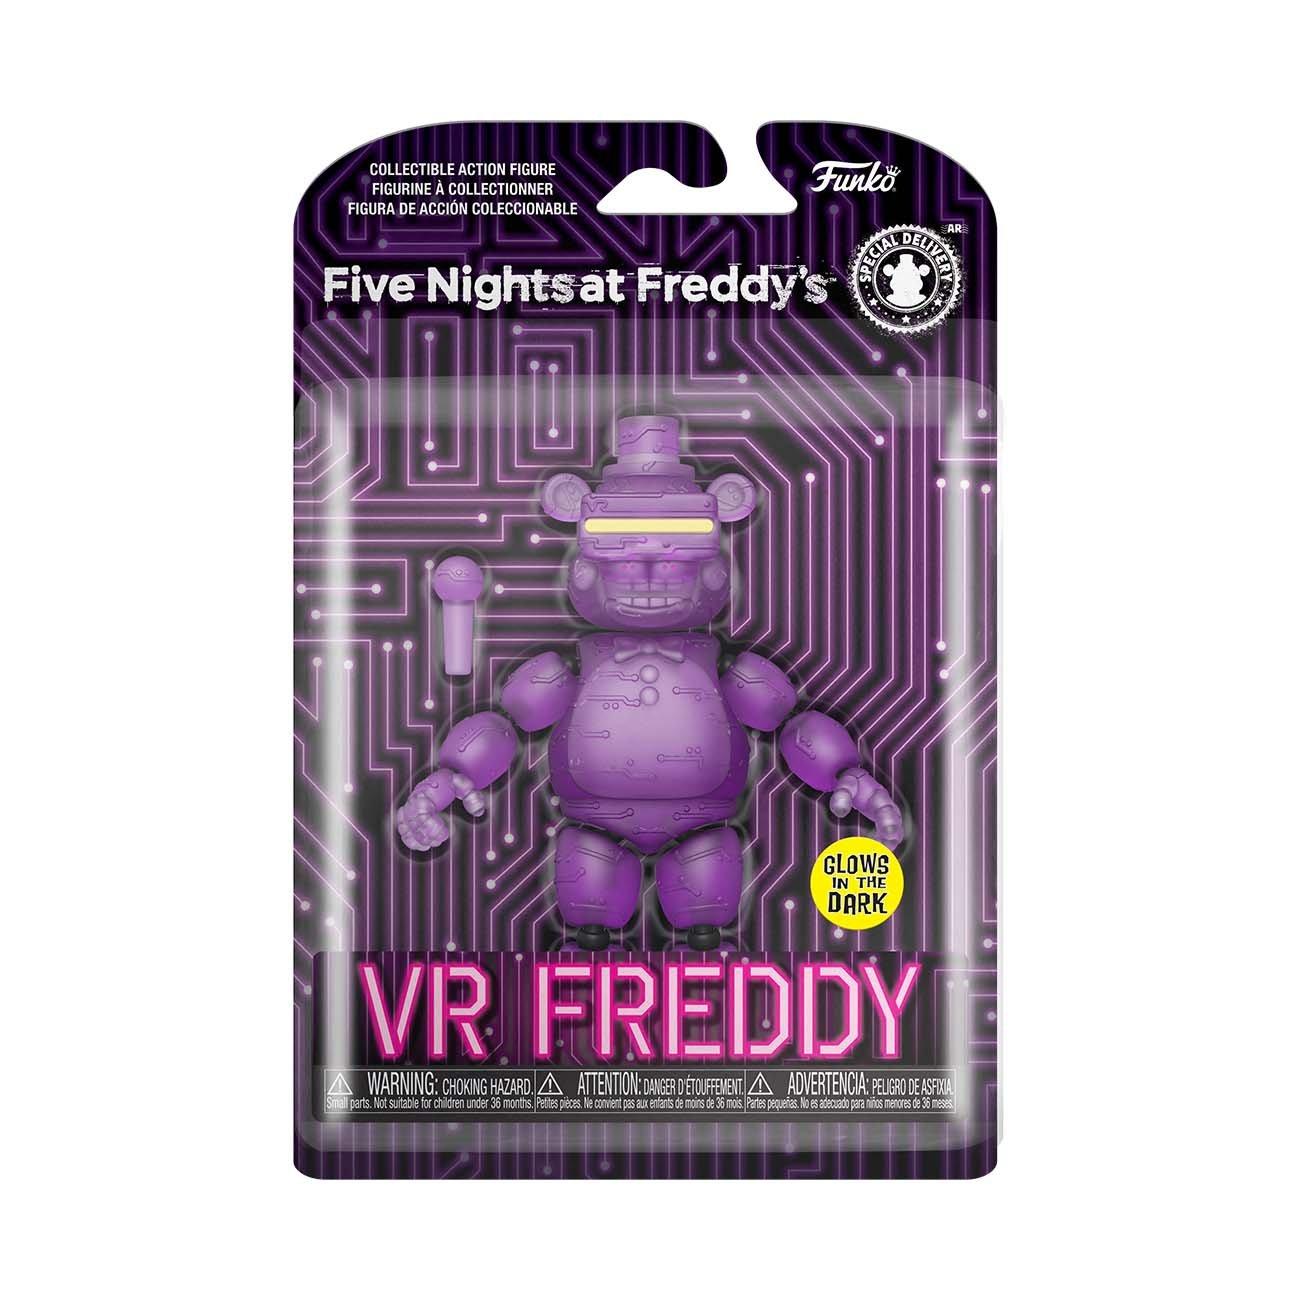 Five Nights at Freddy's AR ganha versão 'estilo' Pokémon Go de terror